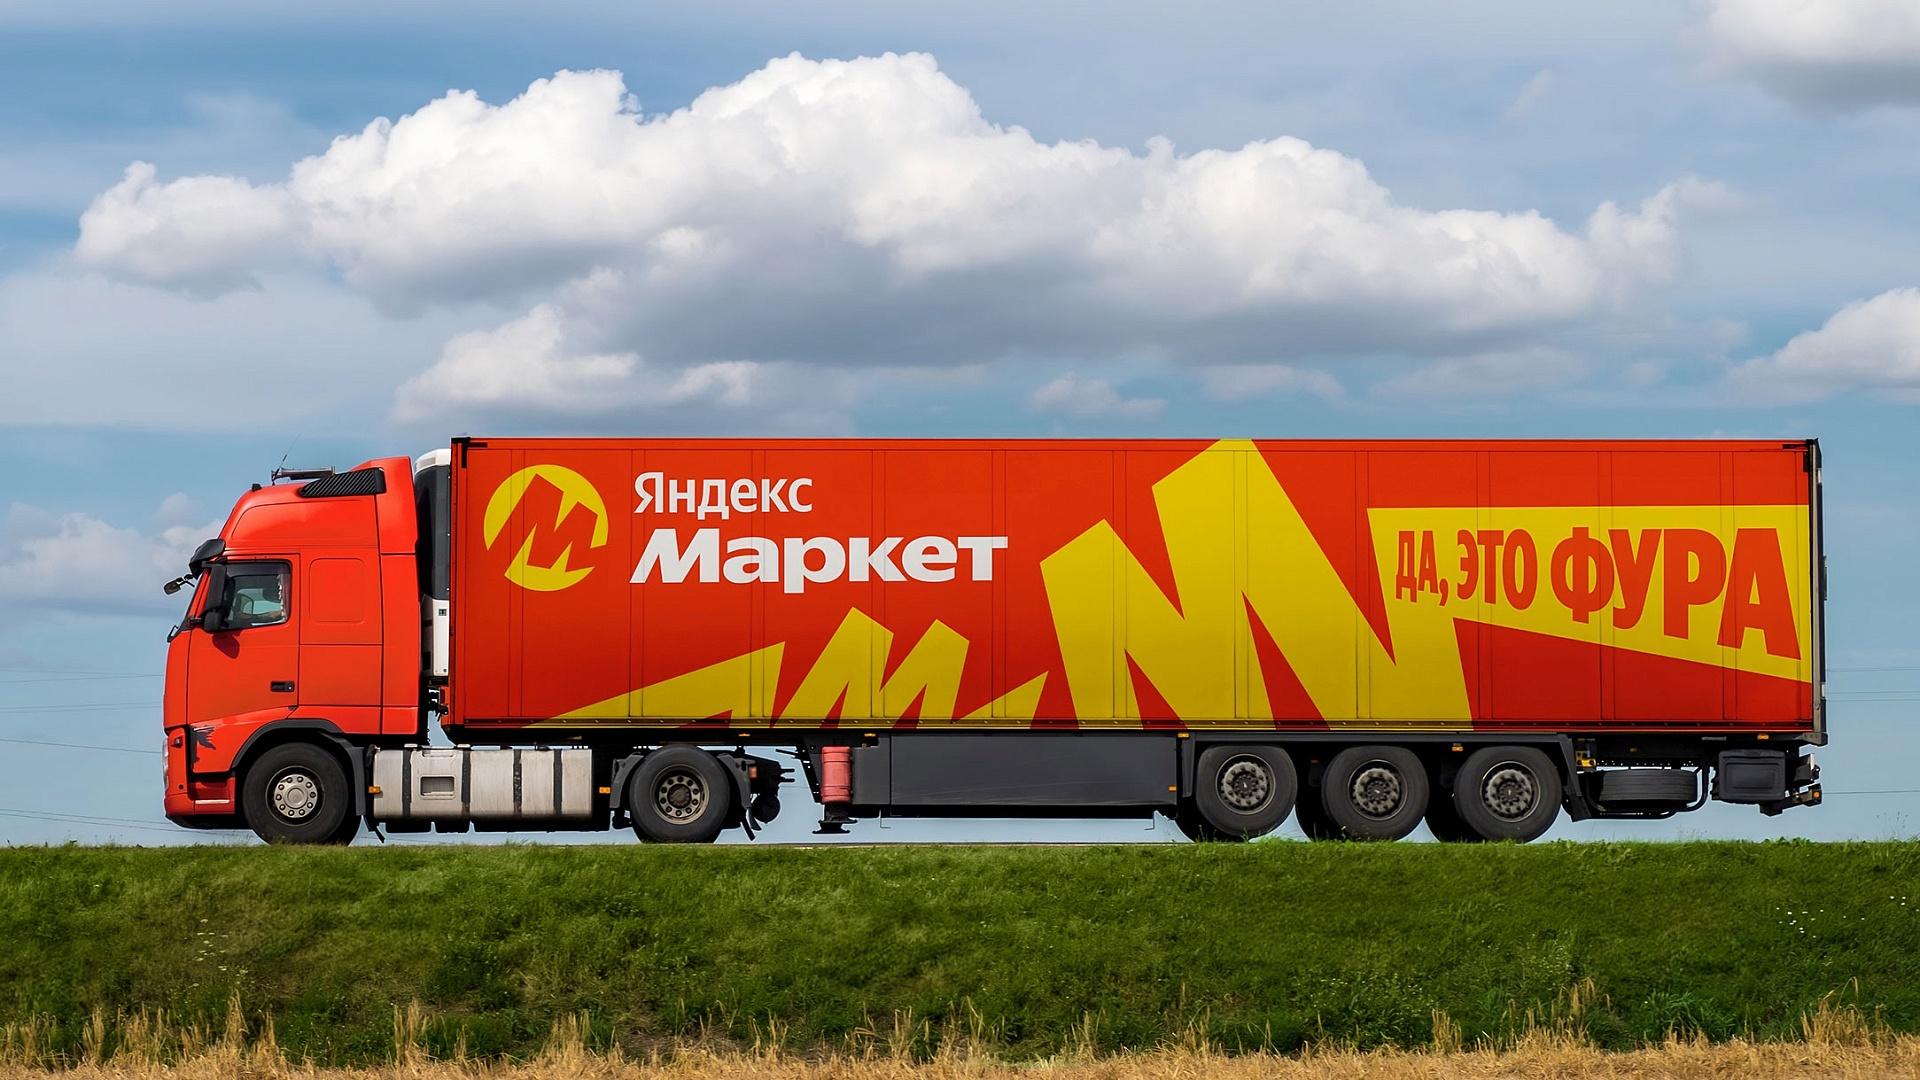 Яндекс Маркет обновил фирменный стиль